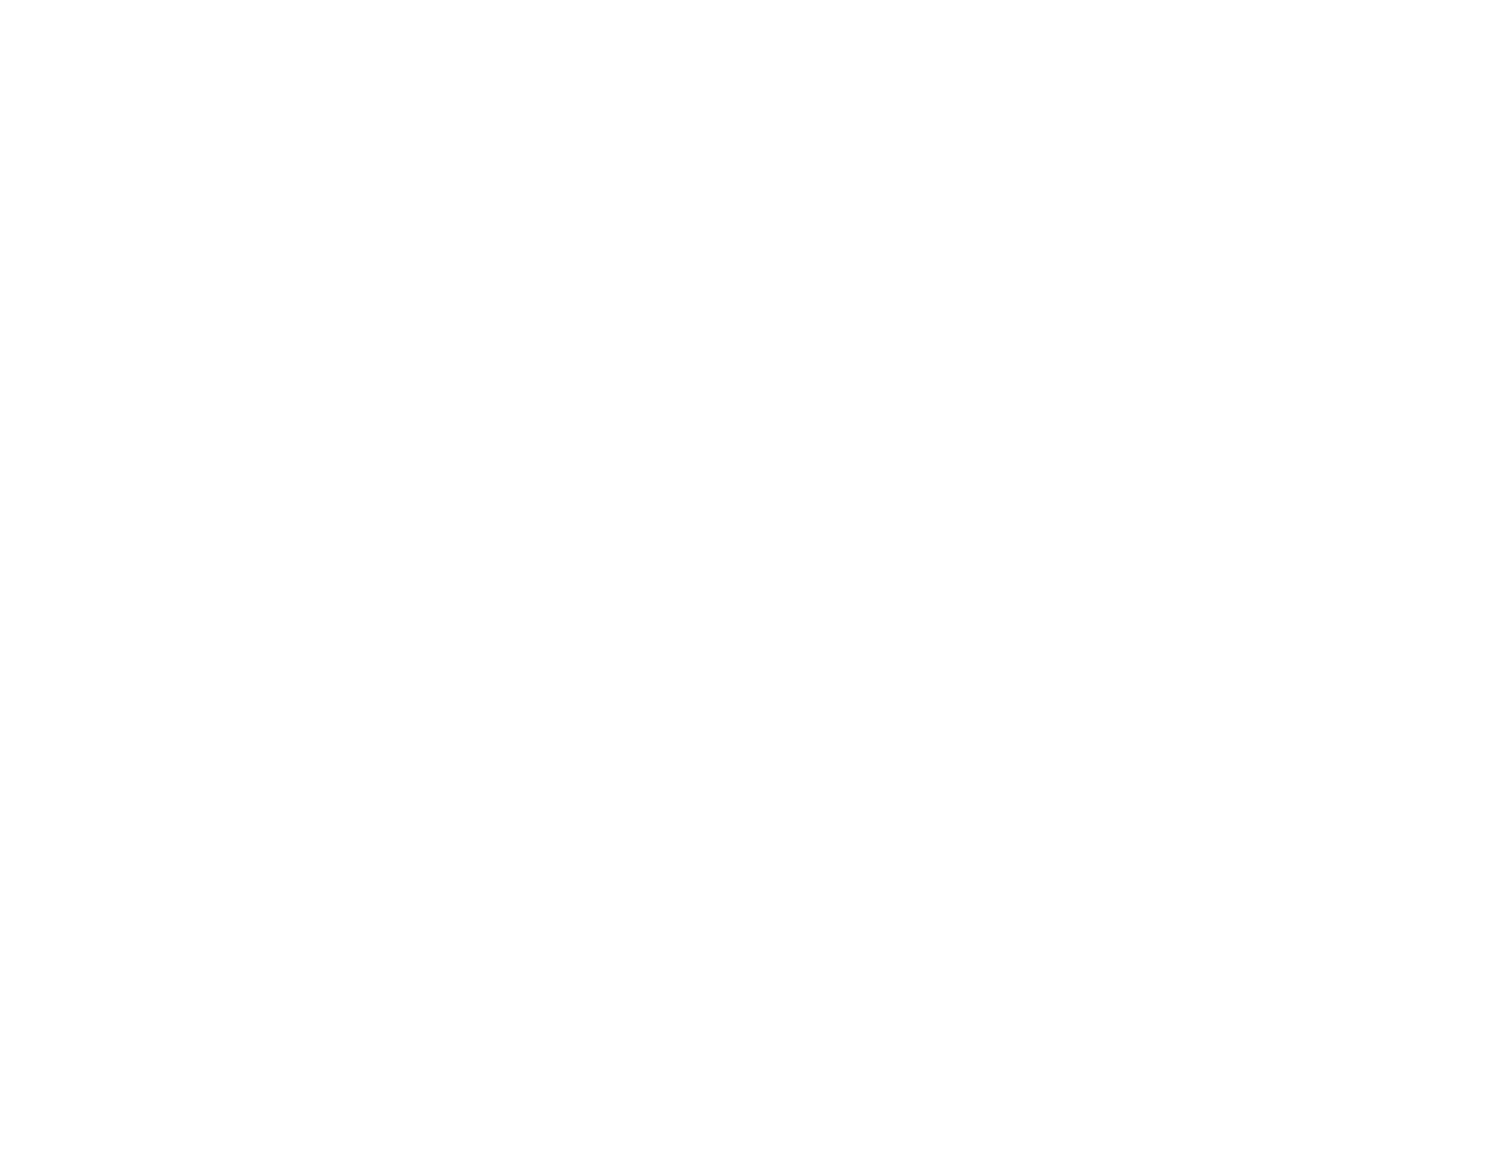 Global Sales & Marketing